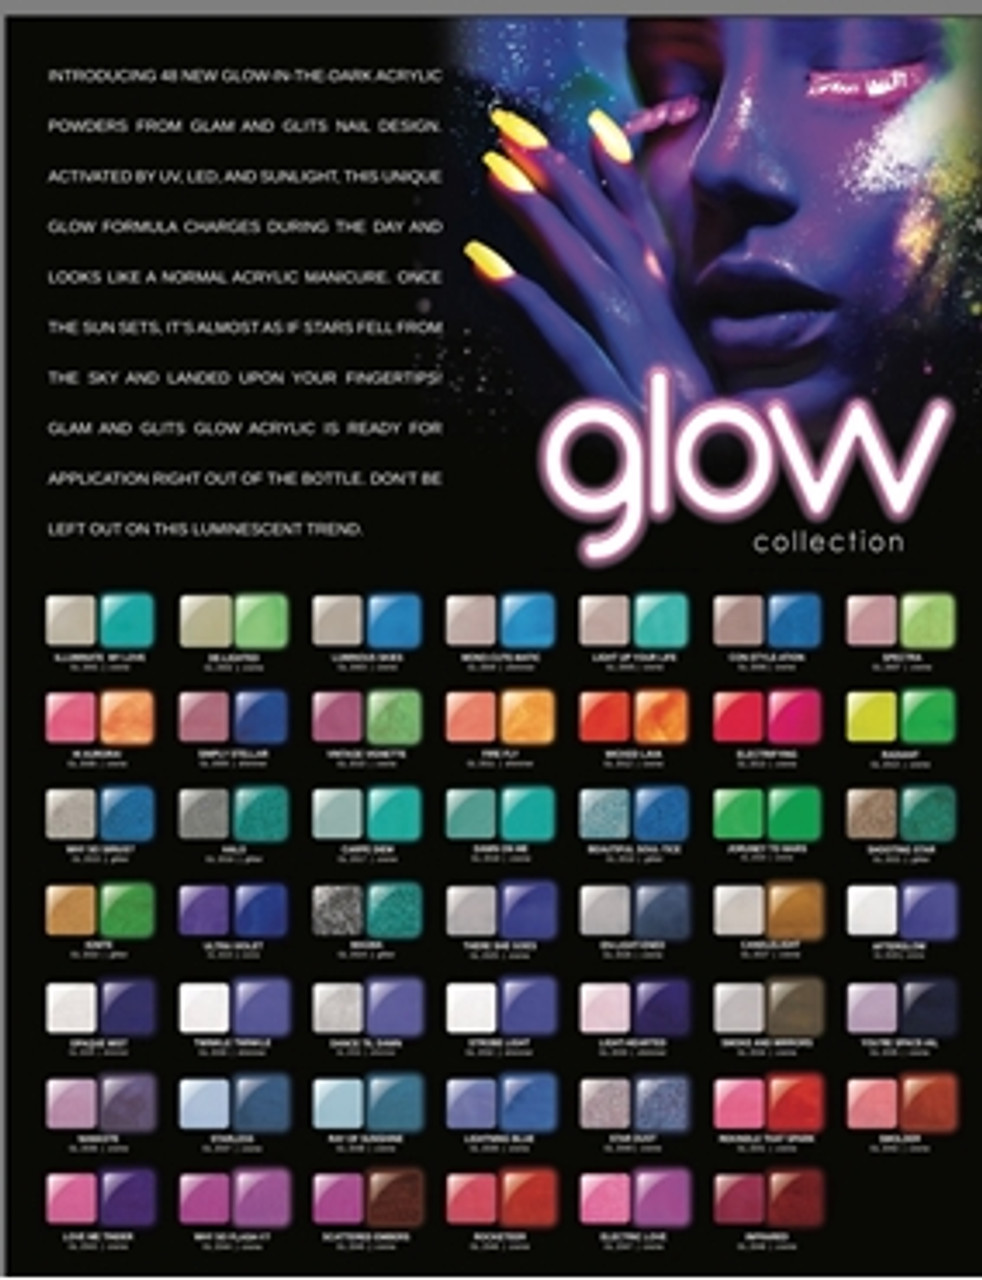 glam and glits glow in the dark acrylic powder